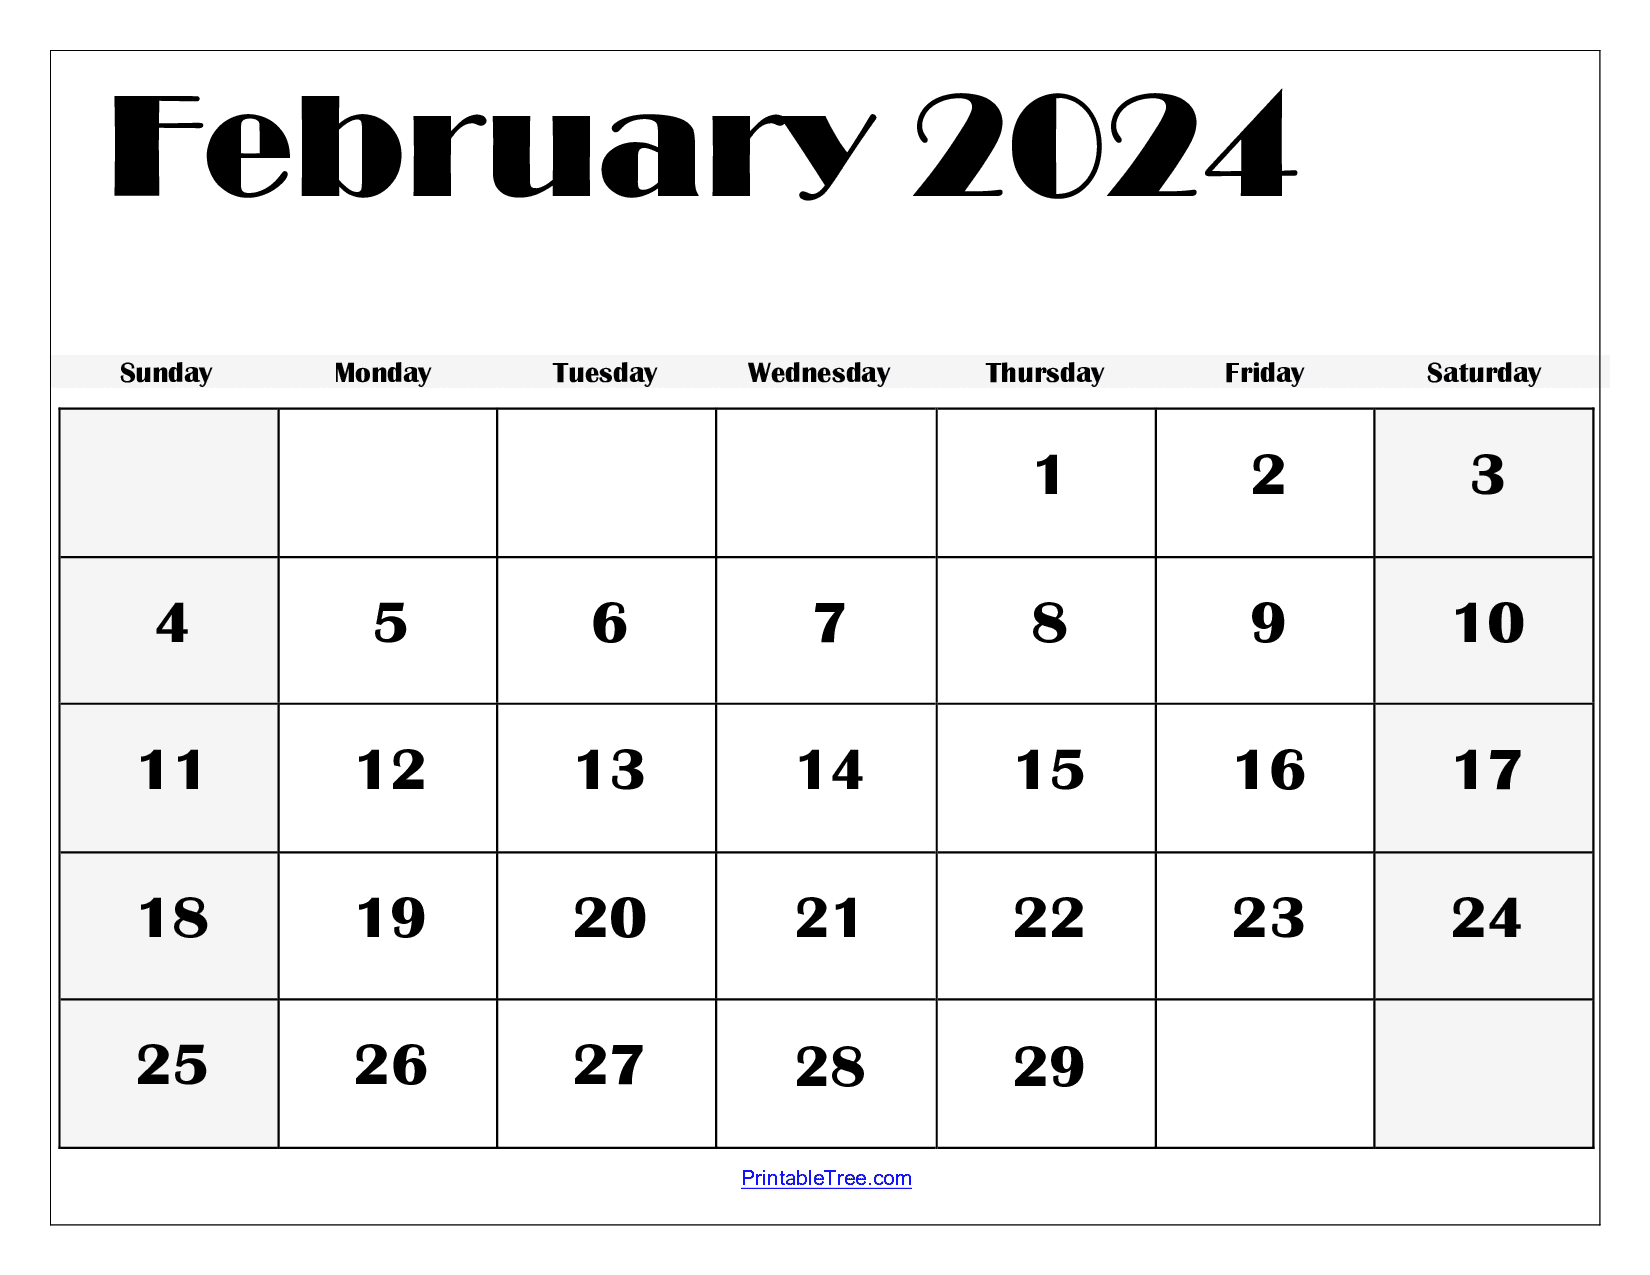 February 2024 Calendar Printable Pdf Template With Holidays for Calendar Feb 2024 Printable